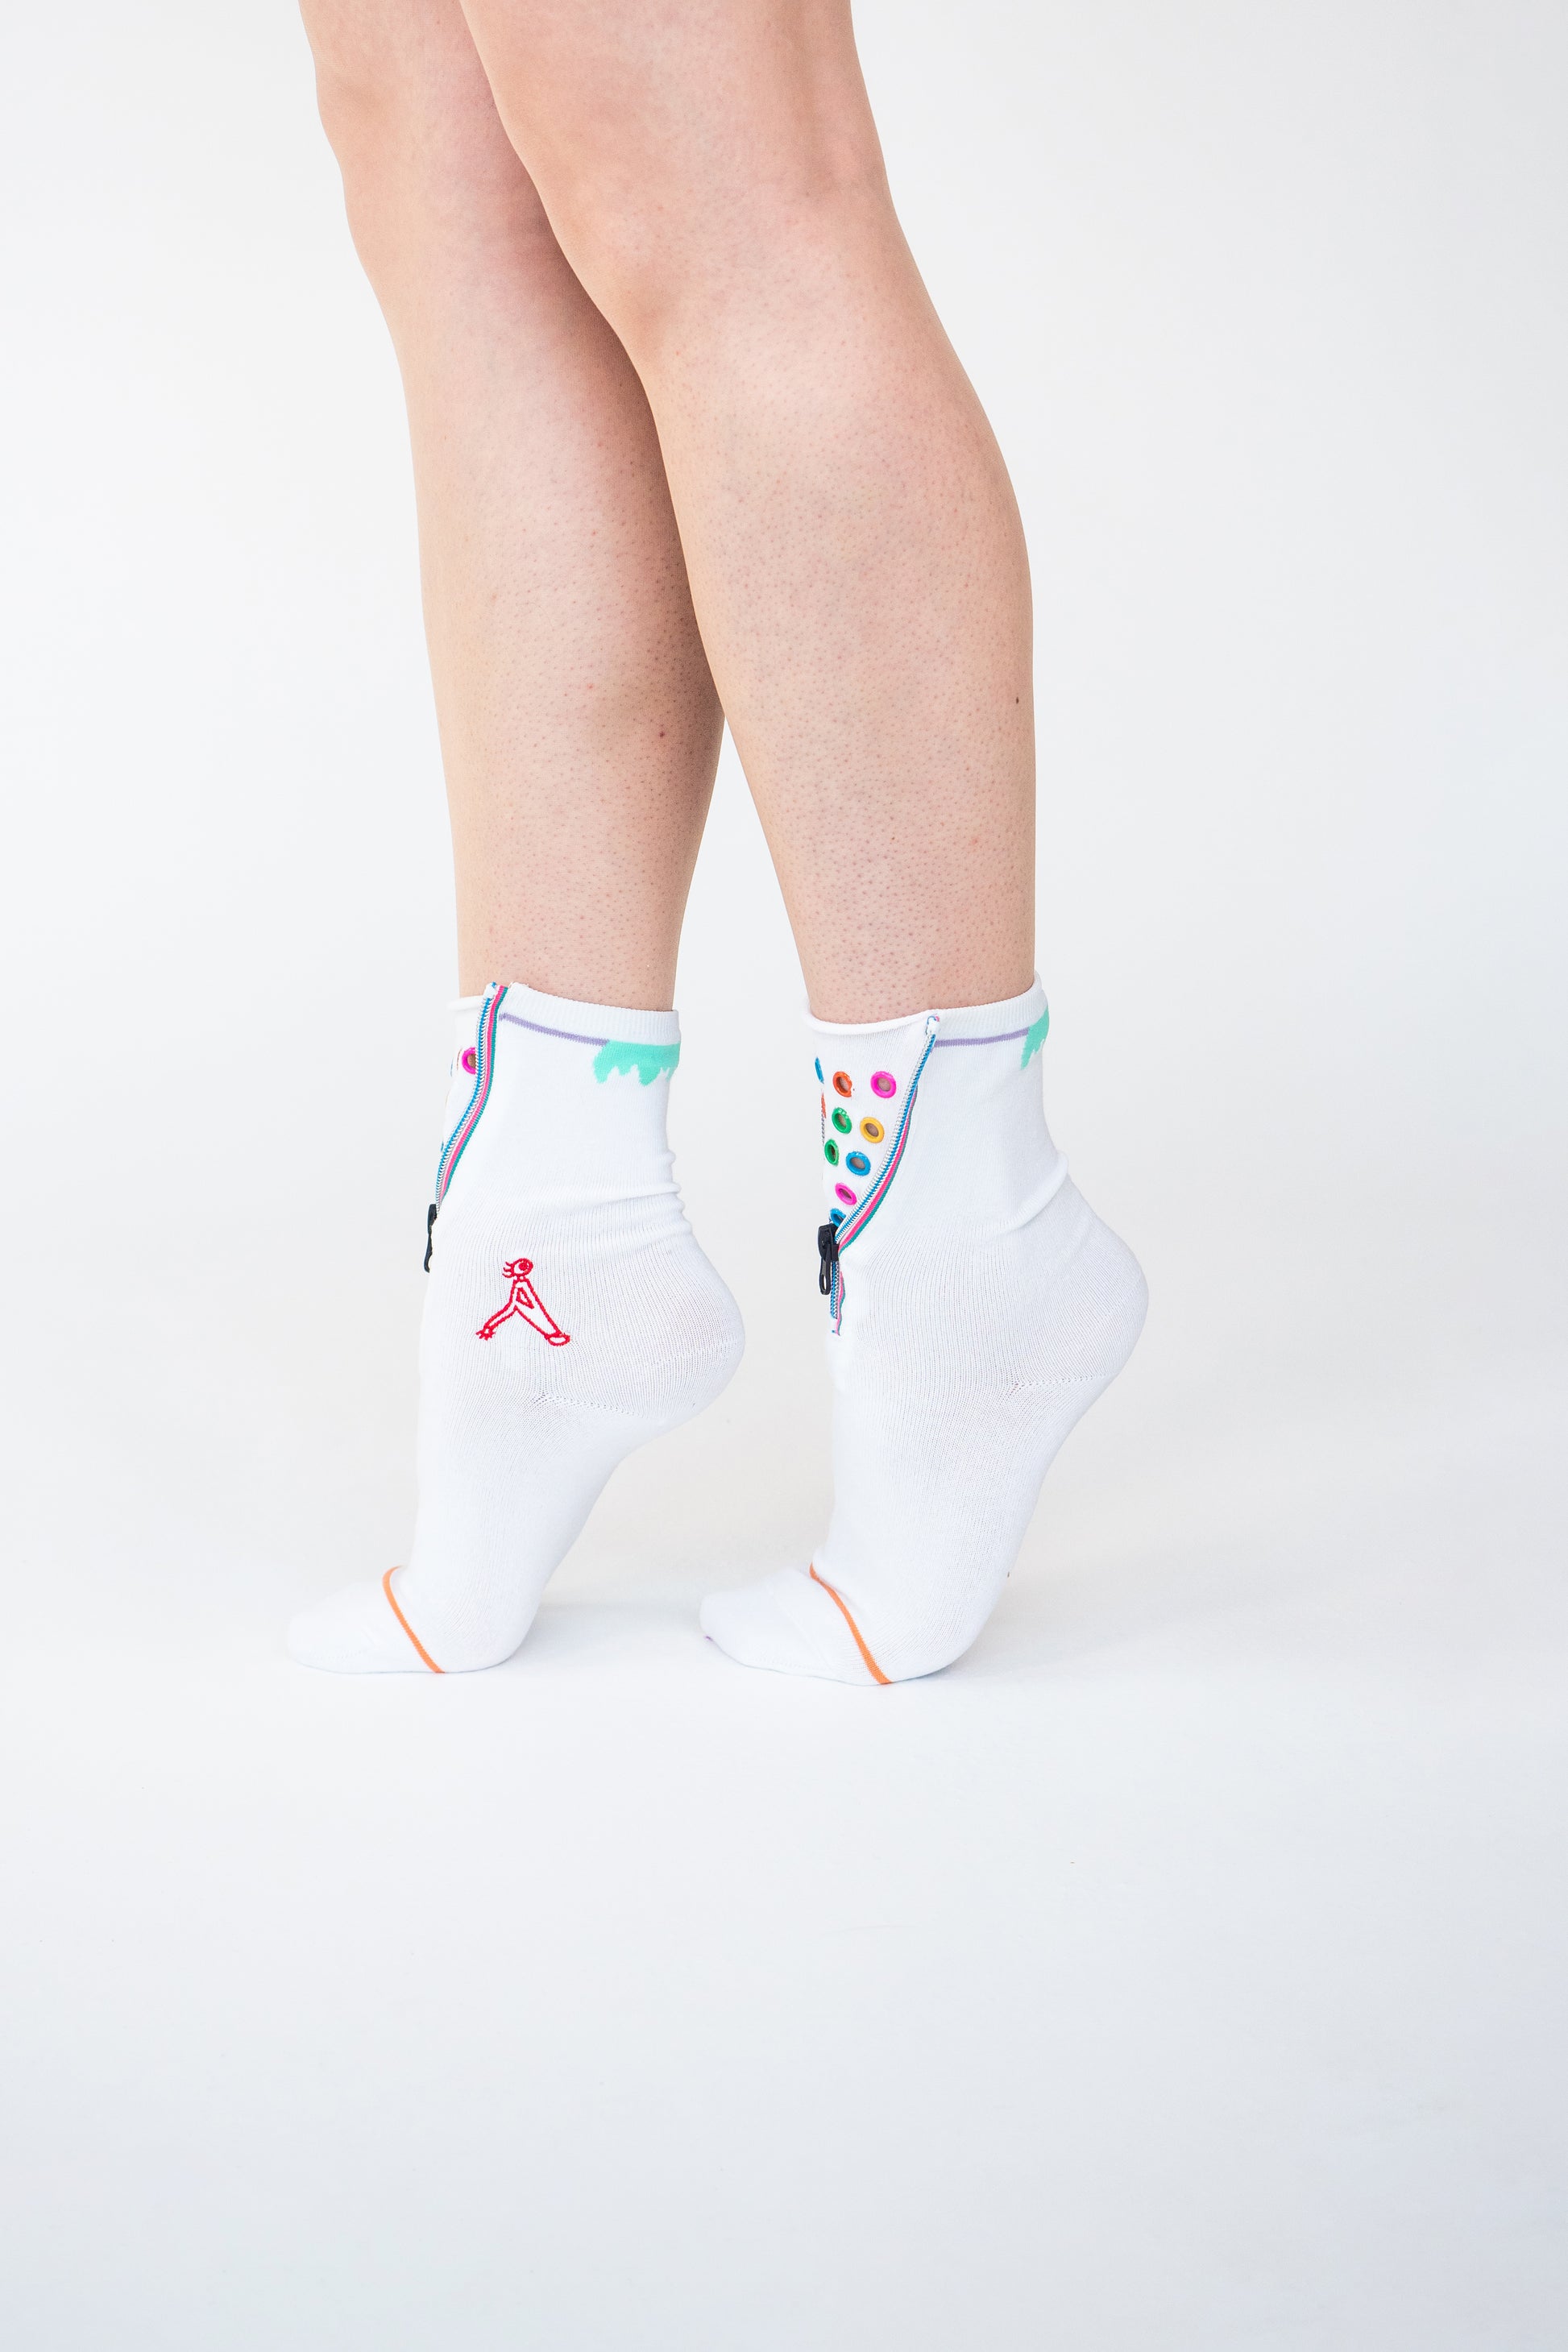 Colour Hoop Socks – Atypical Attire